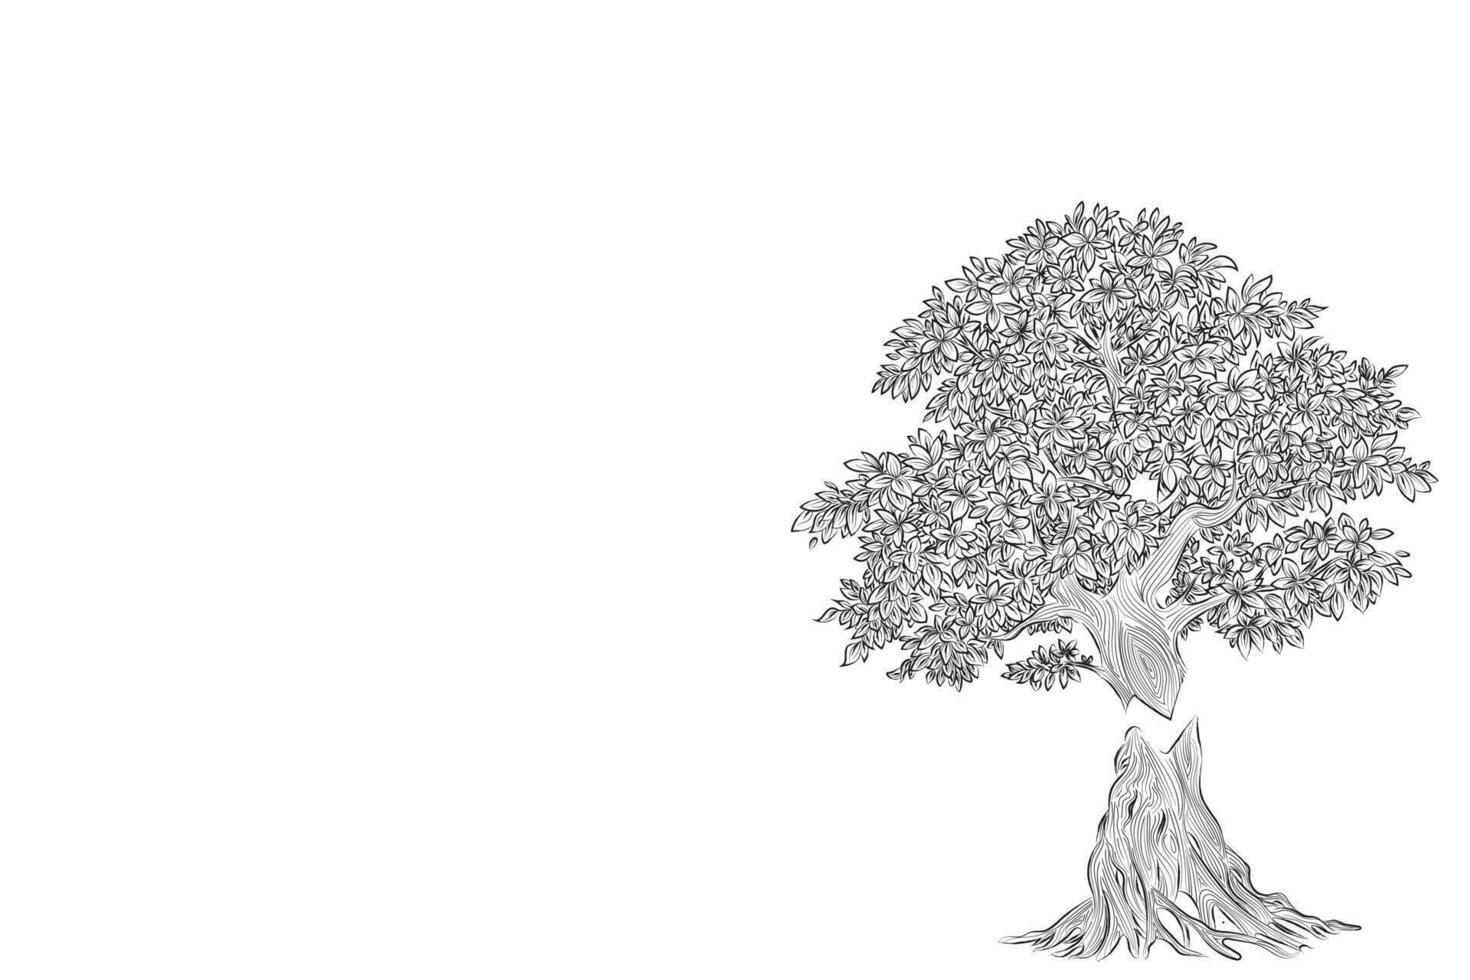 retro estilo naturaleza ilustración con detalles. aceituna árbol trompa. vector